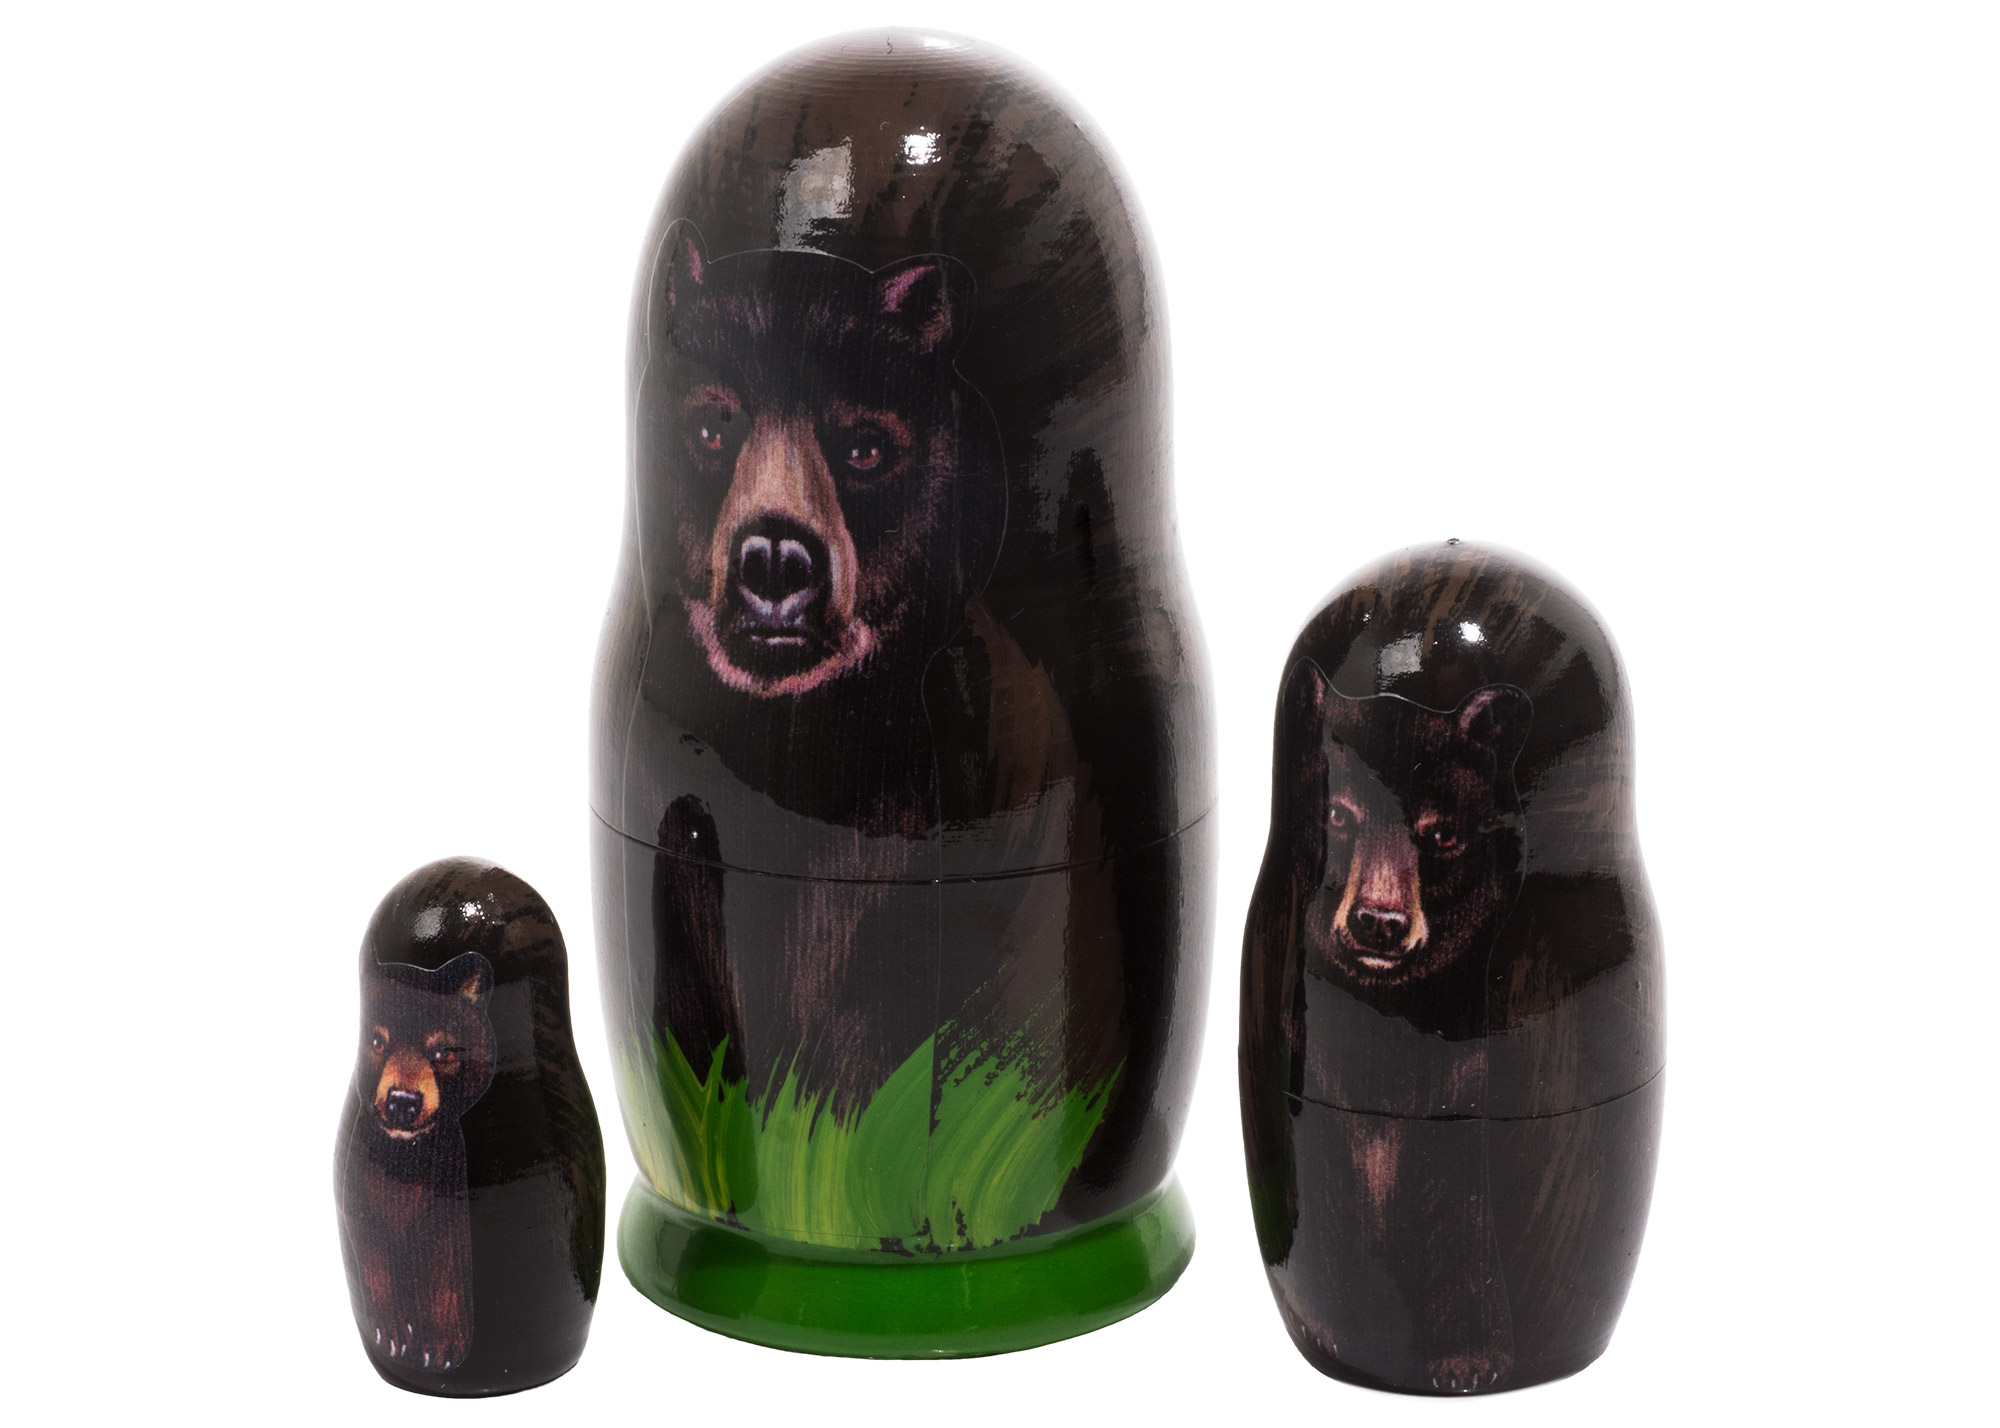 Buy Black Bear Nesting Doll 3pc./3.5" at GoldenCockerel.com